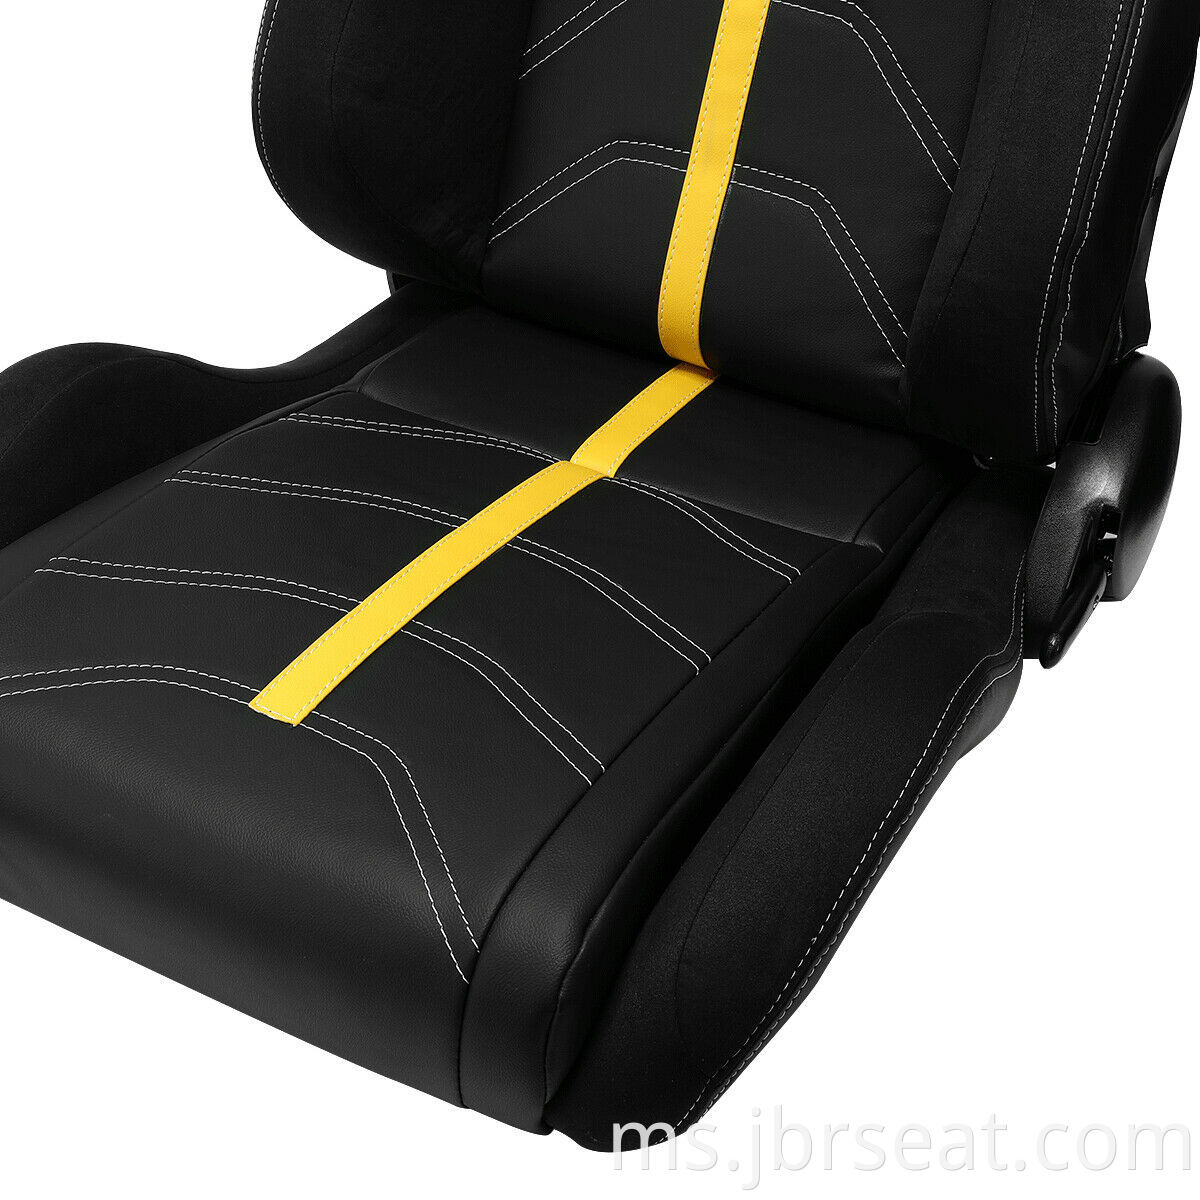 Recaro Racing Seats